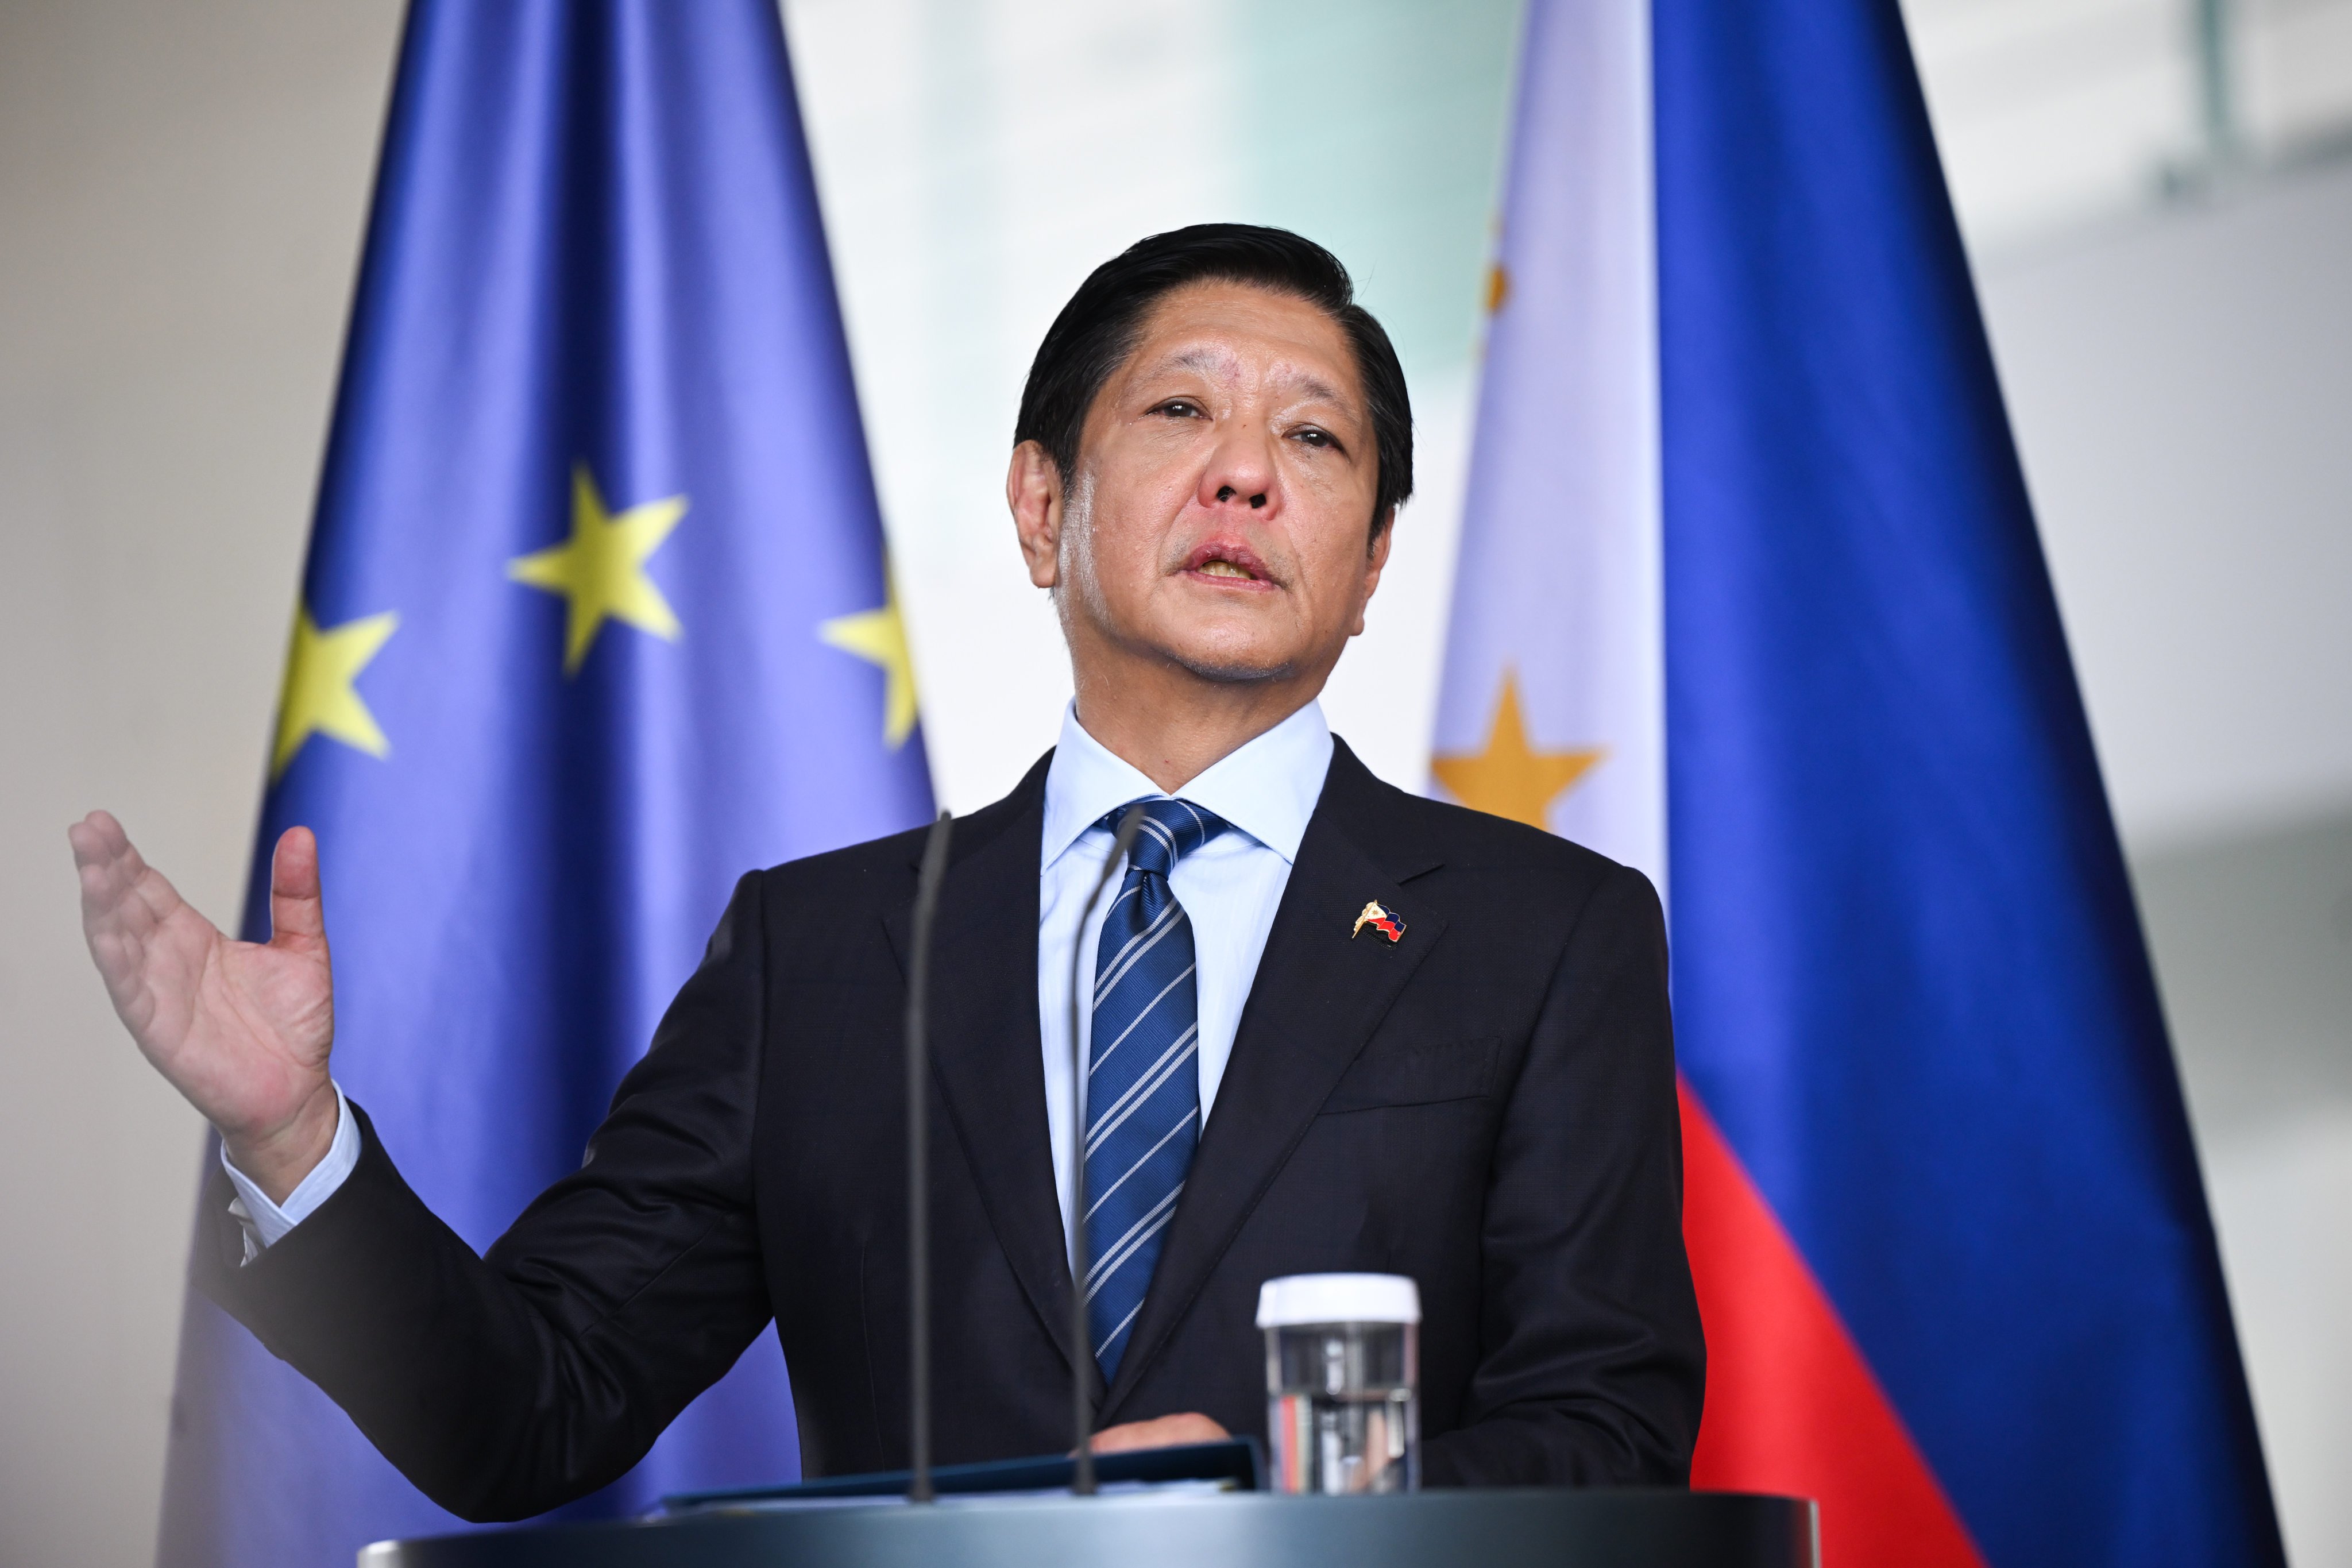 President Ferdinand Marcos Jnr said last month that the Philippines would not recognise an International Criminal Court warrant for Rodrigo Duterte’s arrest. Photo: dpa